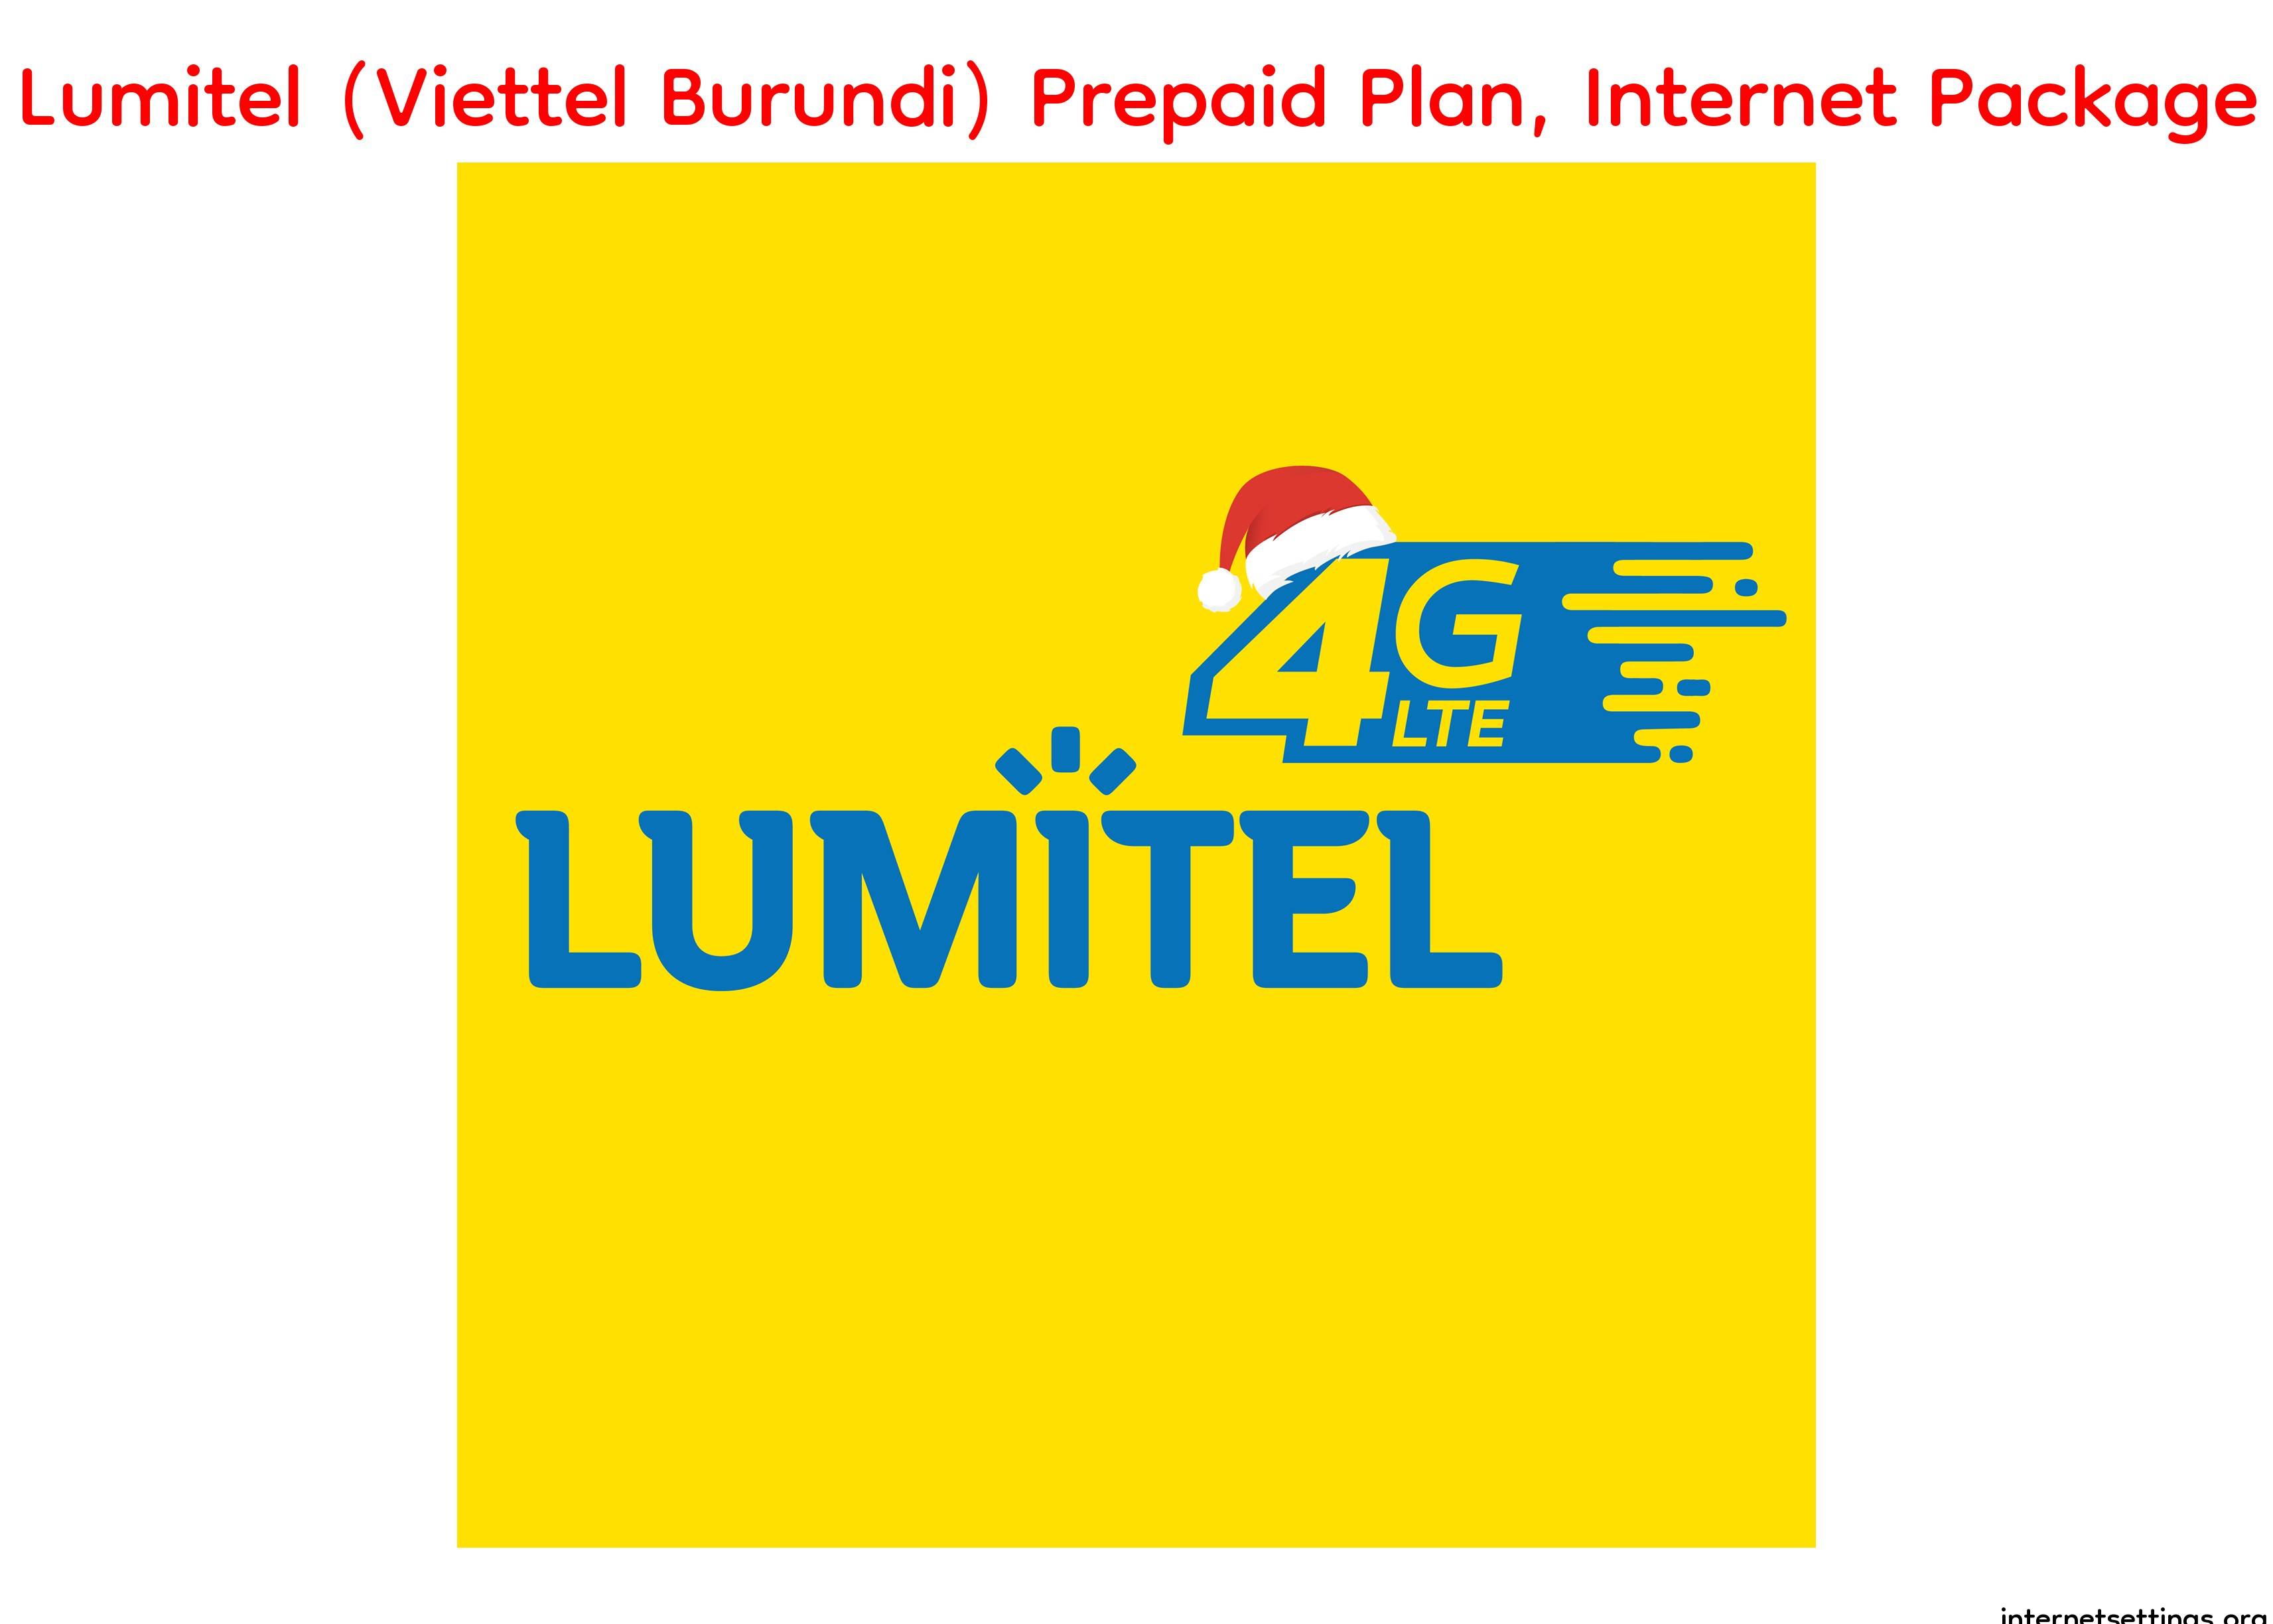 Lumitel (Viettel Burundi) Prepaid Plan, Internet Package, Offer, and More